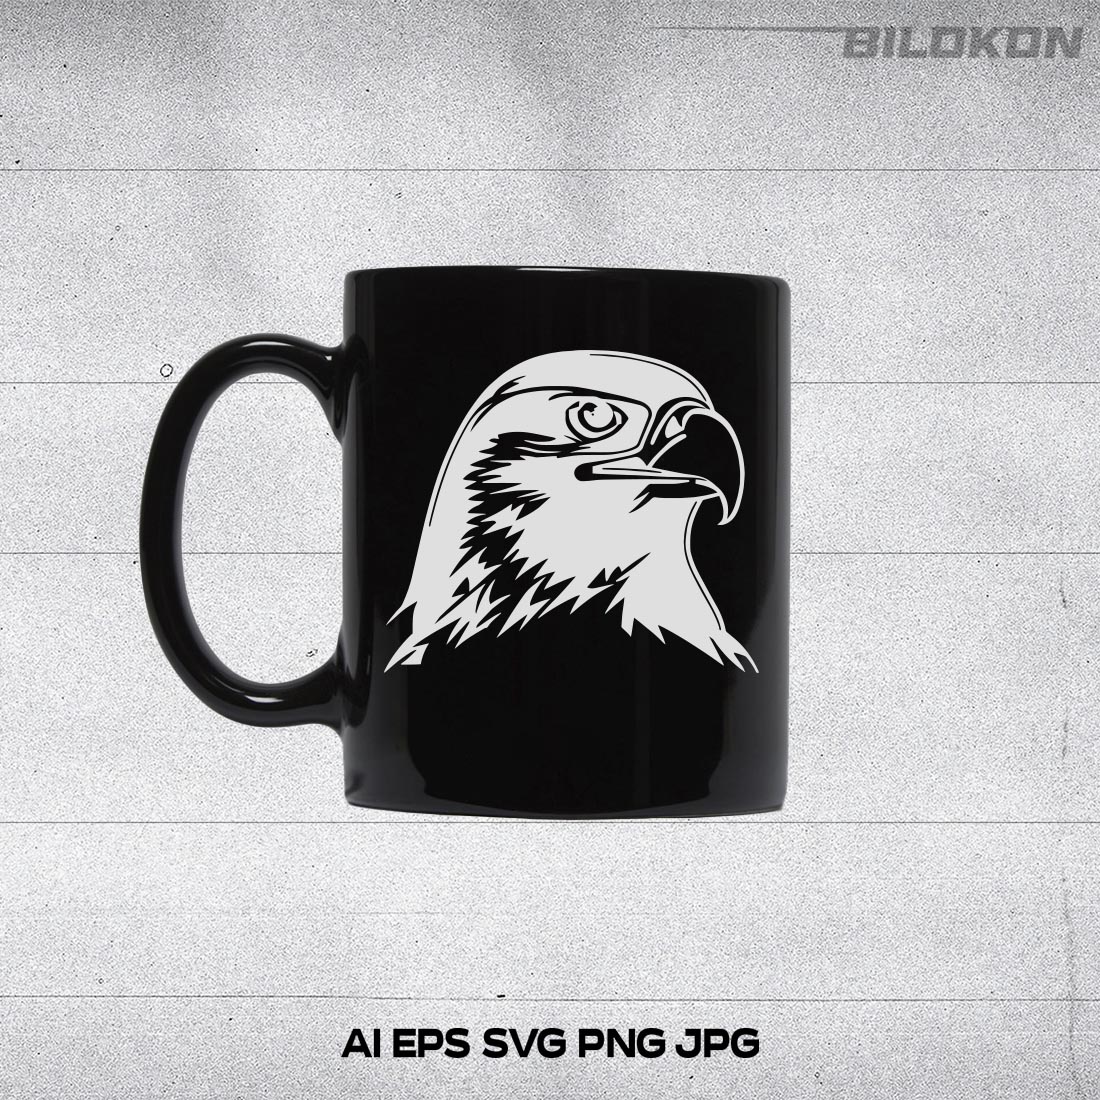 Black coffee mug with an eagle's head on it.